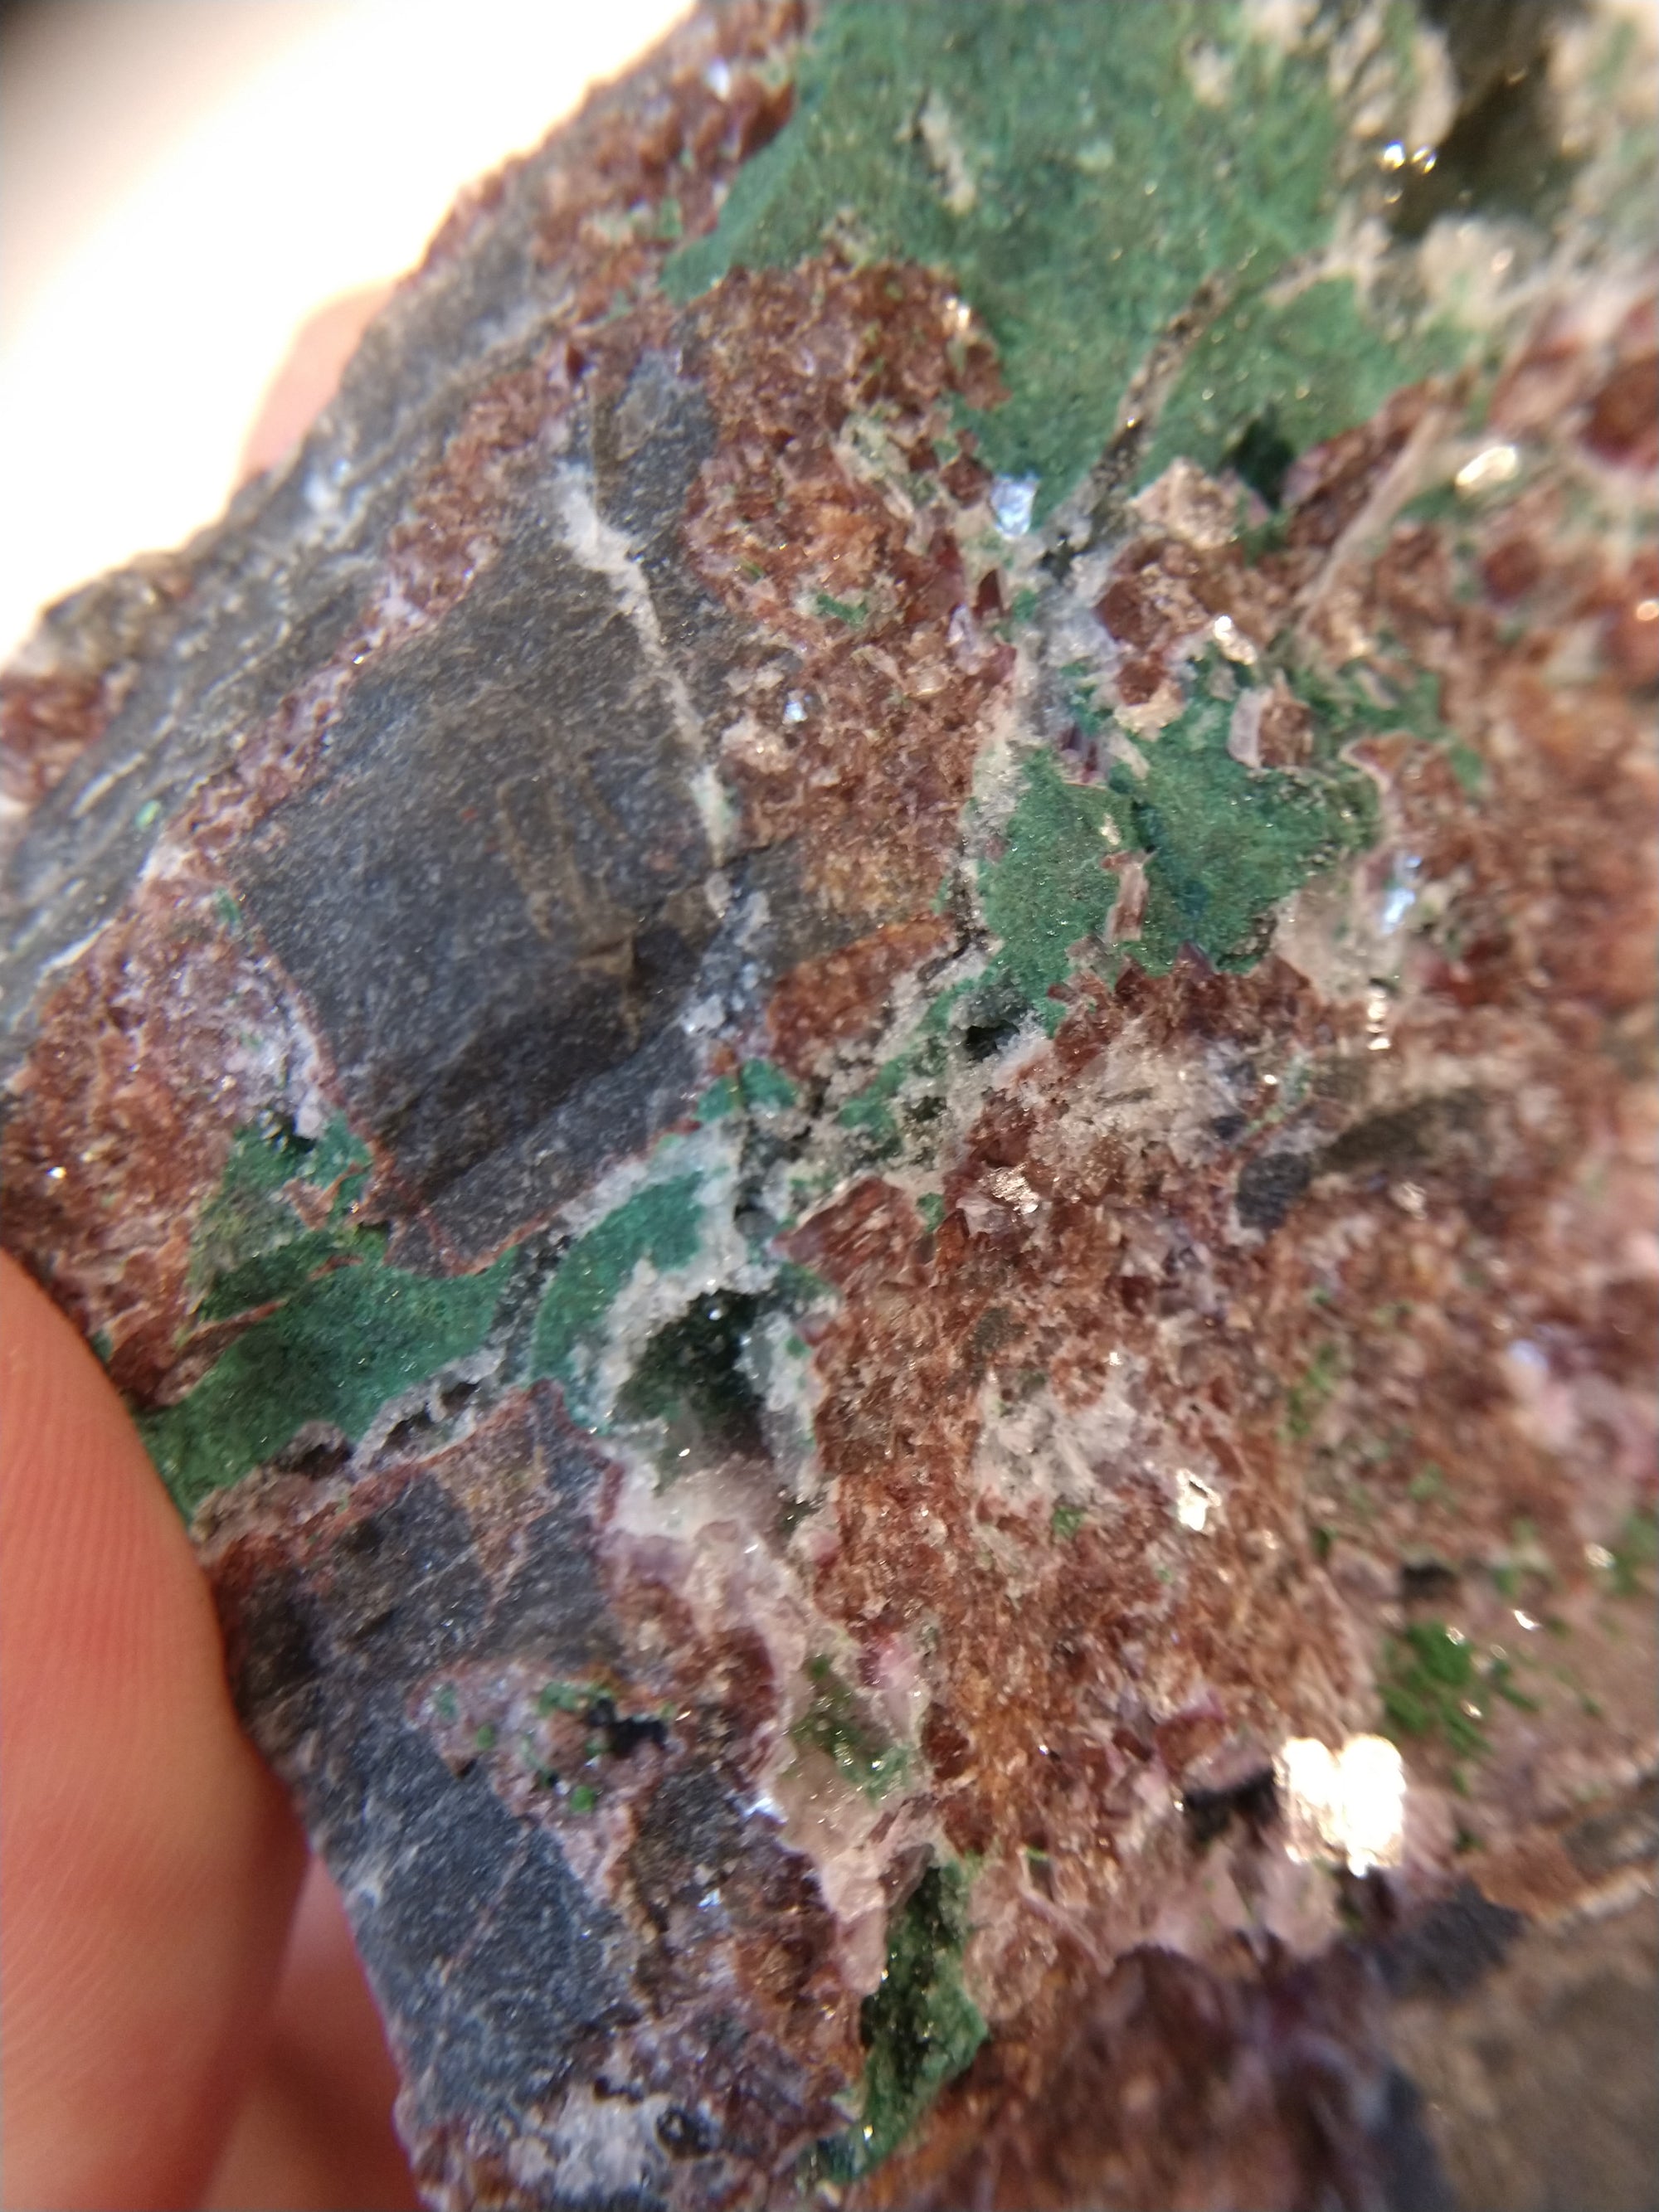 Druzy Quartz Over Malachite with Calcite from the Congo